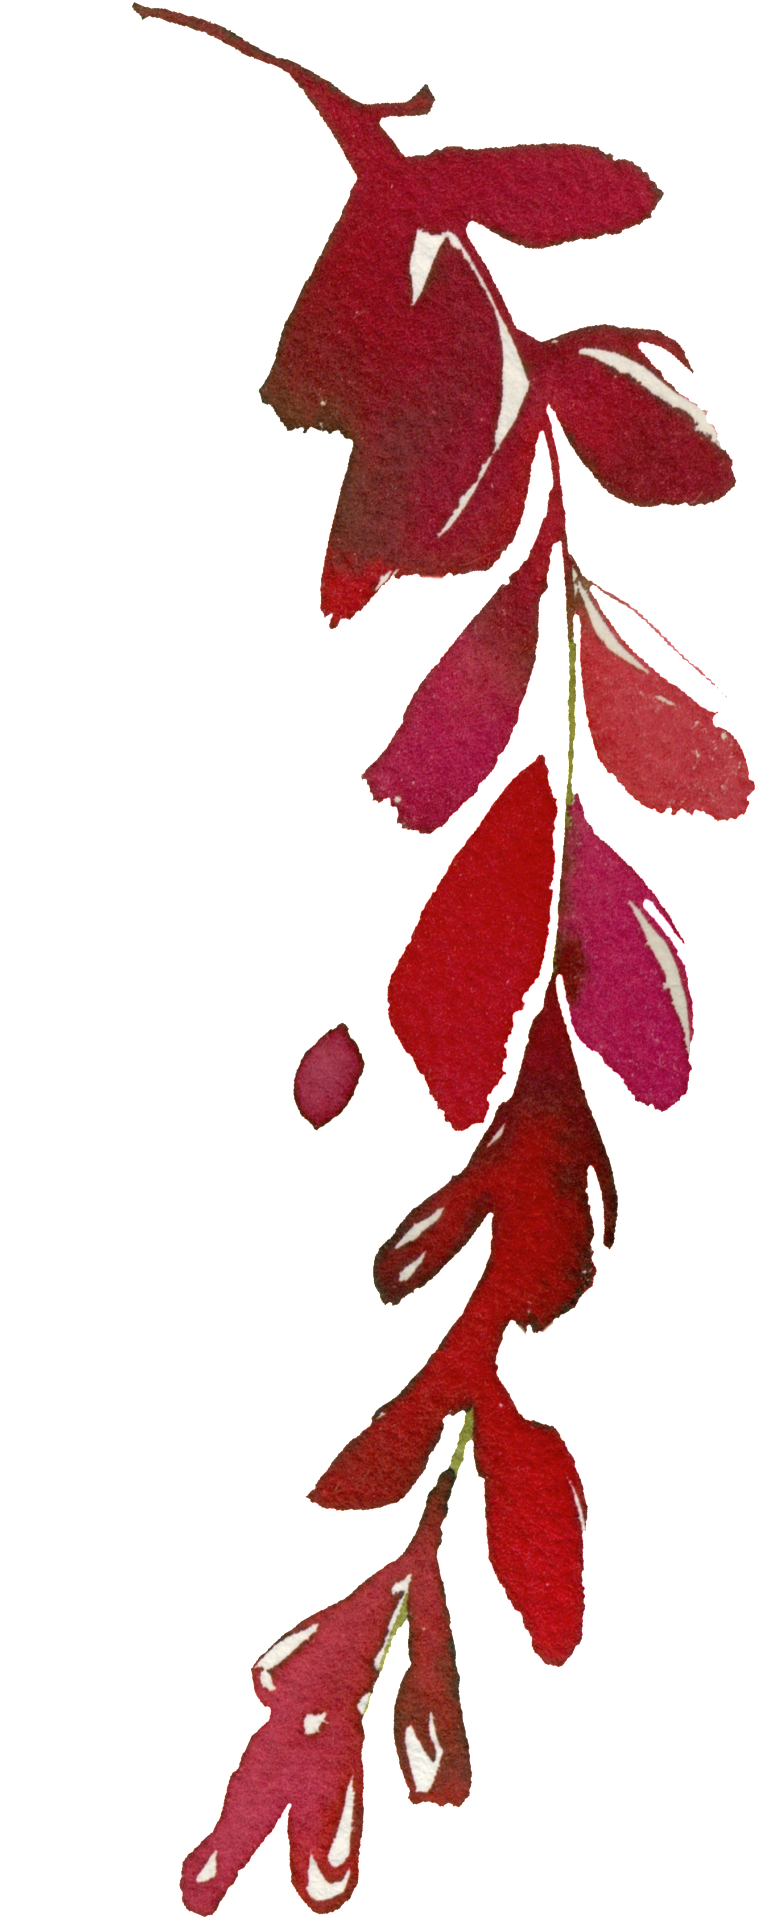 Red Autumn Leaves Illustration